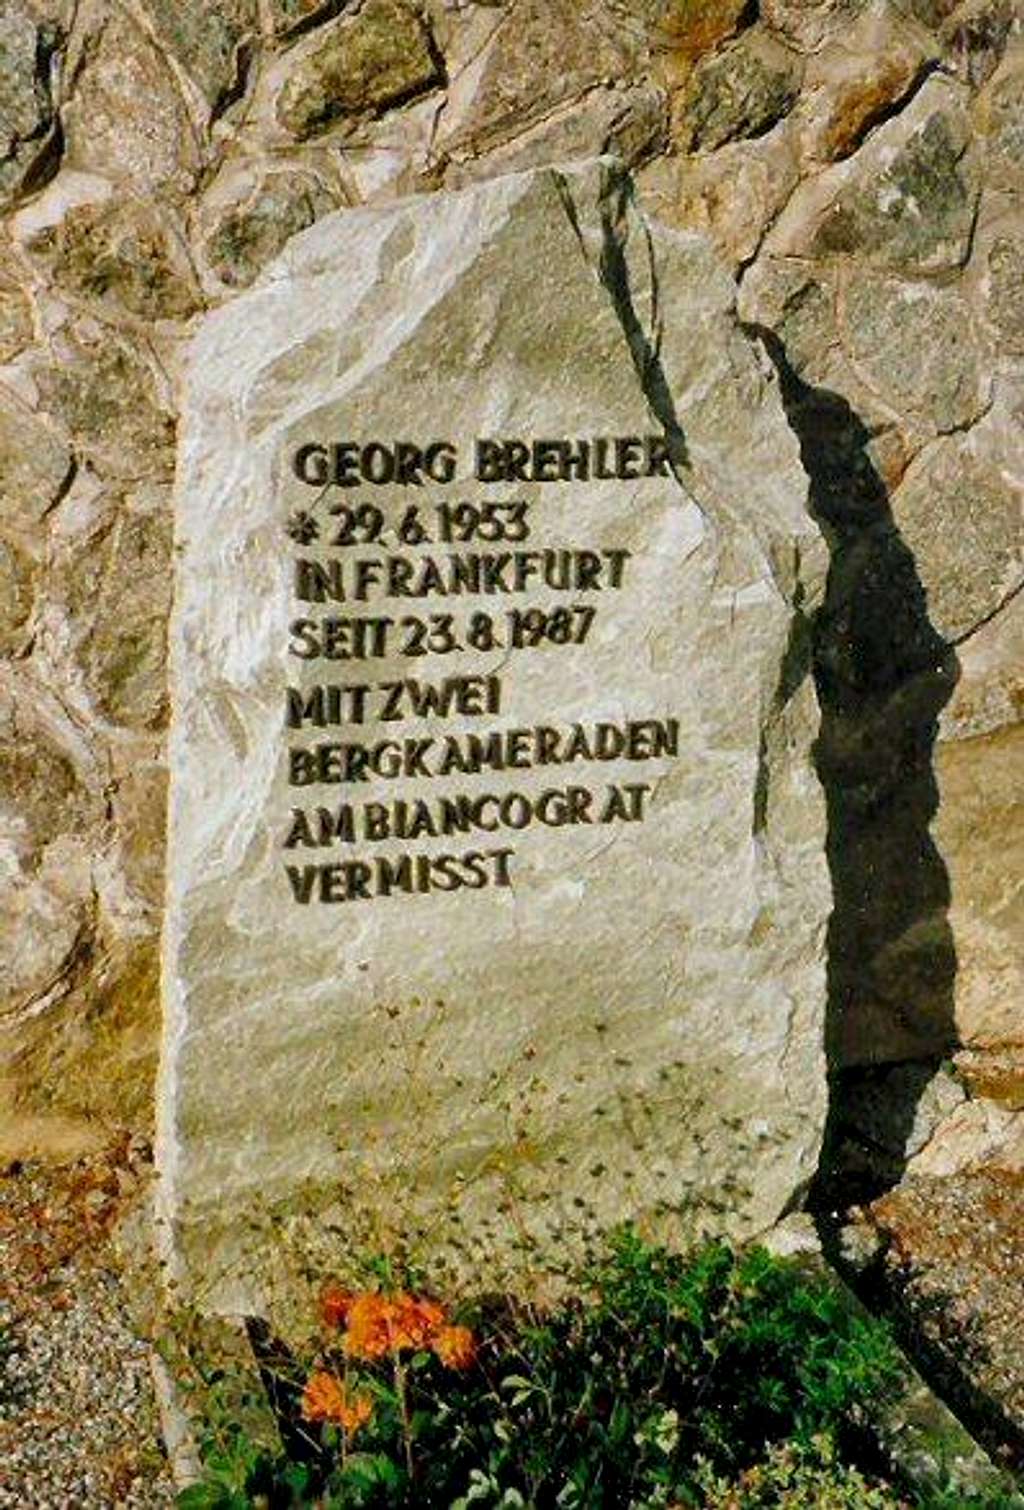 Georg Brehler…